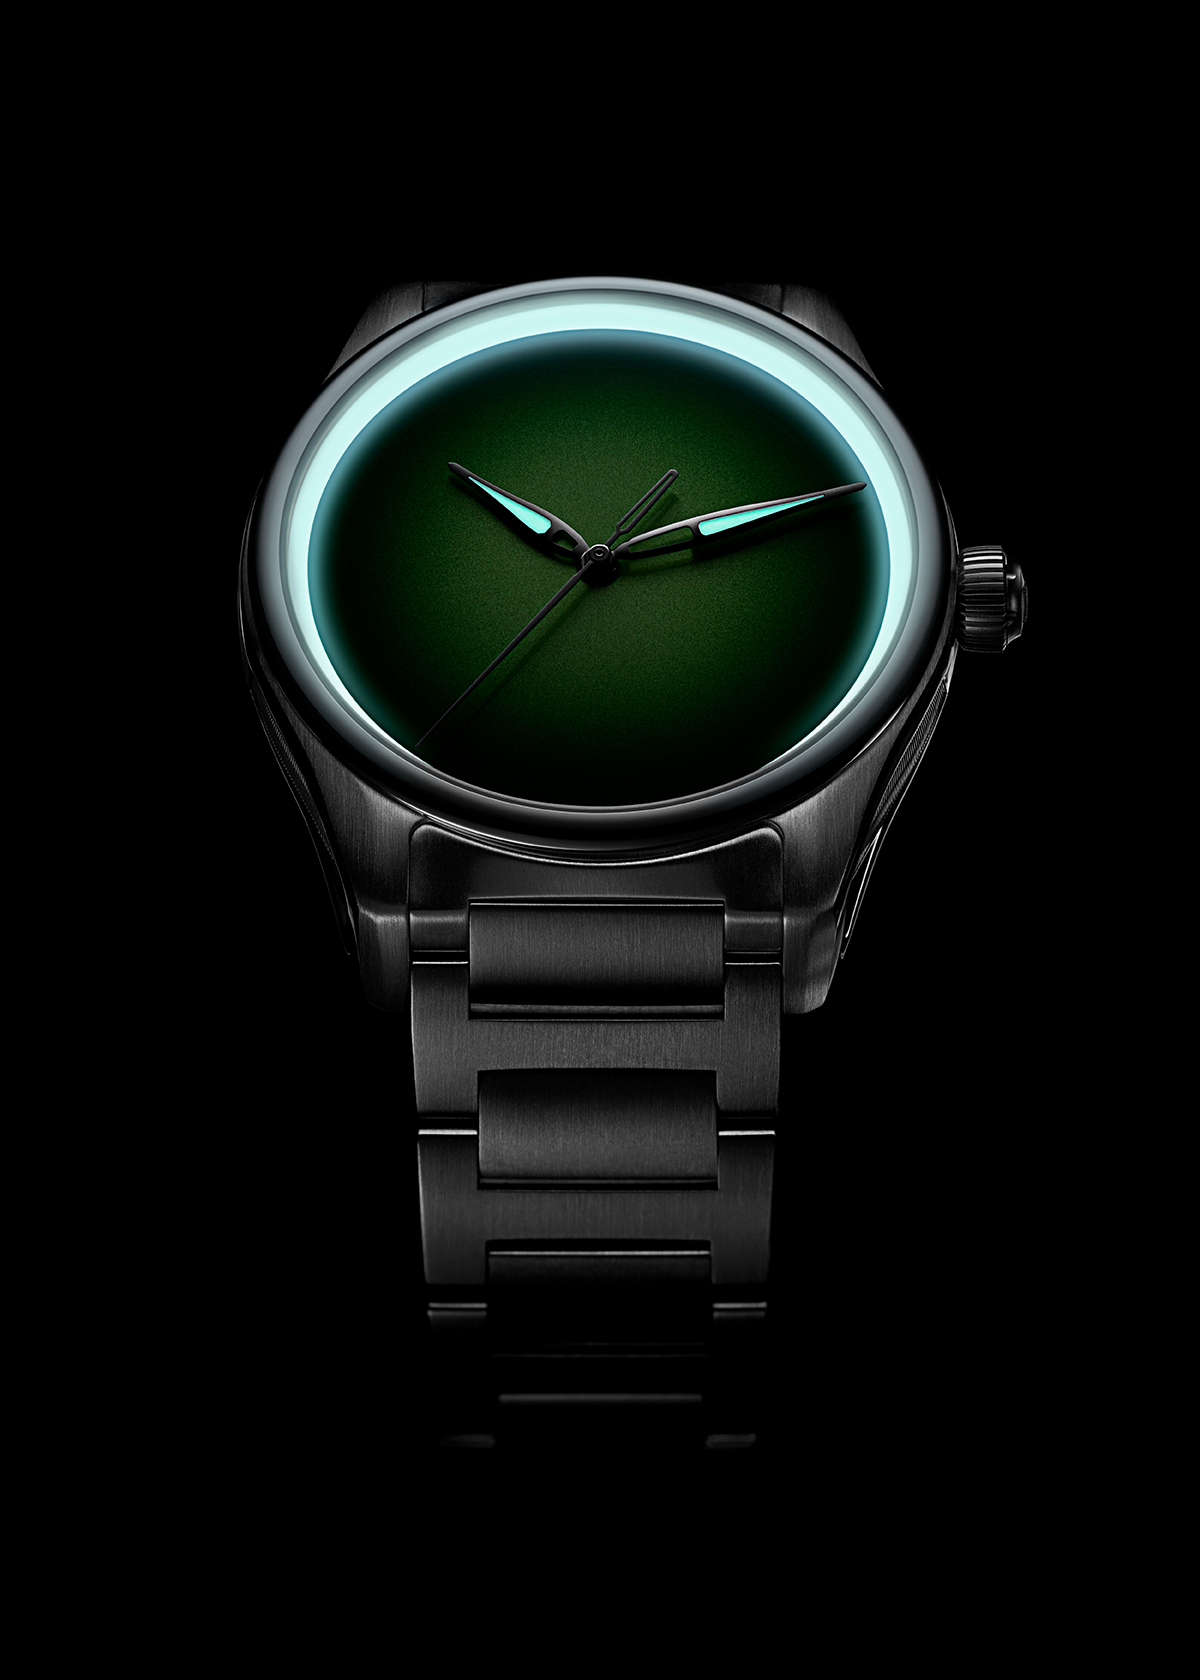 Cortina-Watch-H-Moser-Cie-Pioneer-Centre-Seconds-Concept-Citrus-Green-Ref-3201-1204-dark